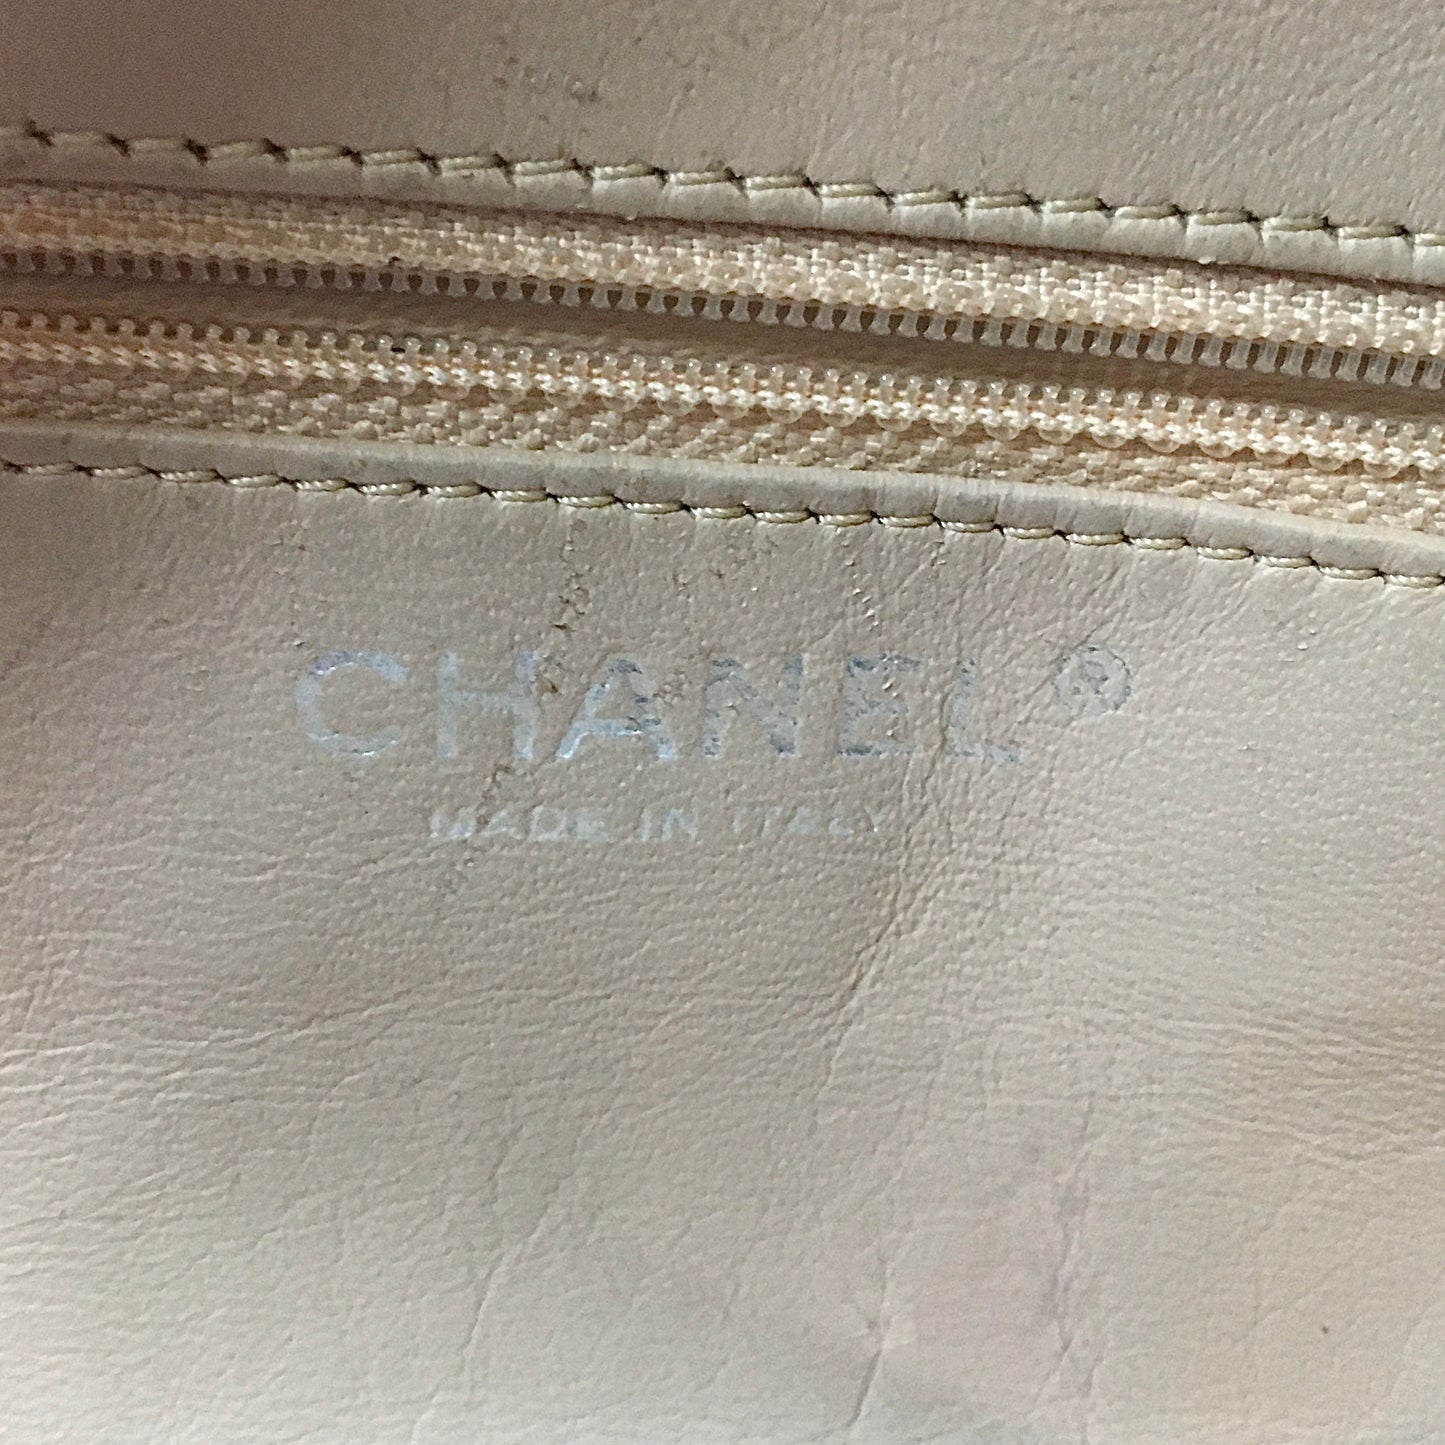 Chanel Bronze CC Leather Chain Shoulder Bag Sku# 69487L